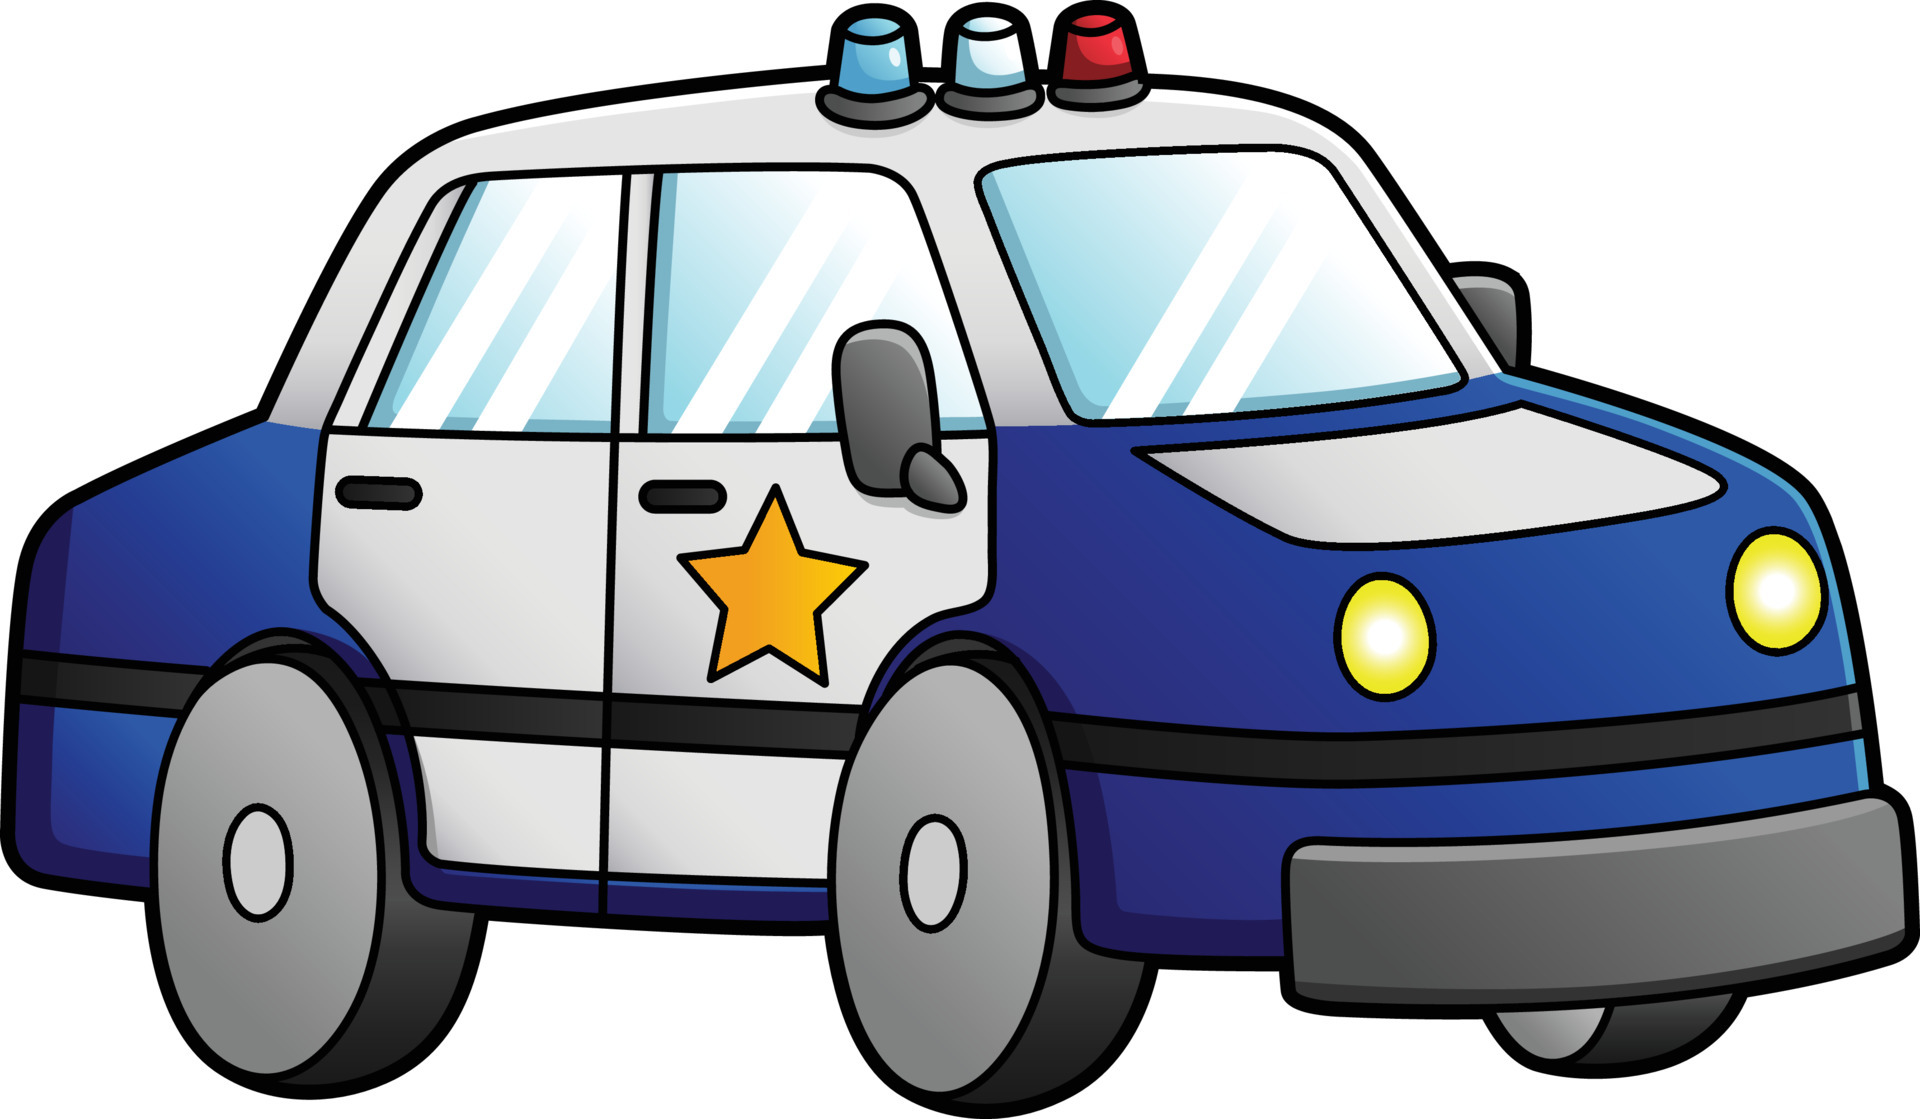 Police Car Cartoon Clipart Colored Illustration 6458272 Vector Art at  Vecteezy